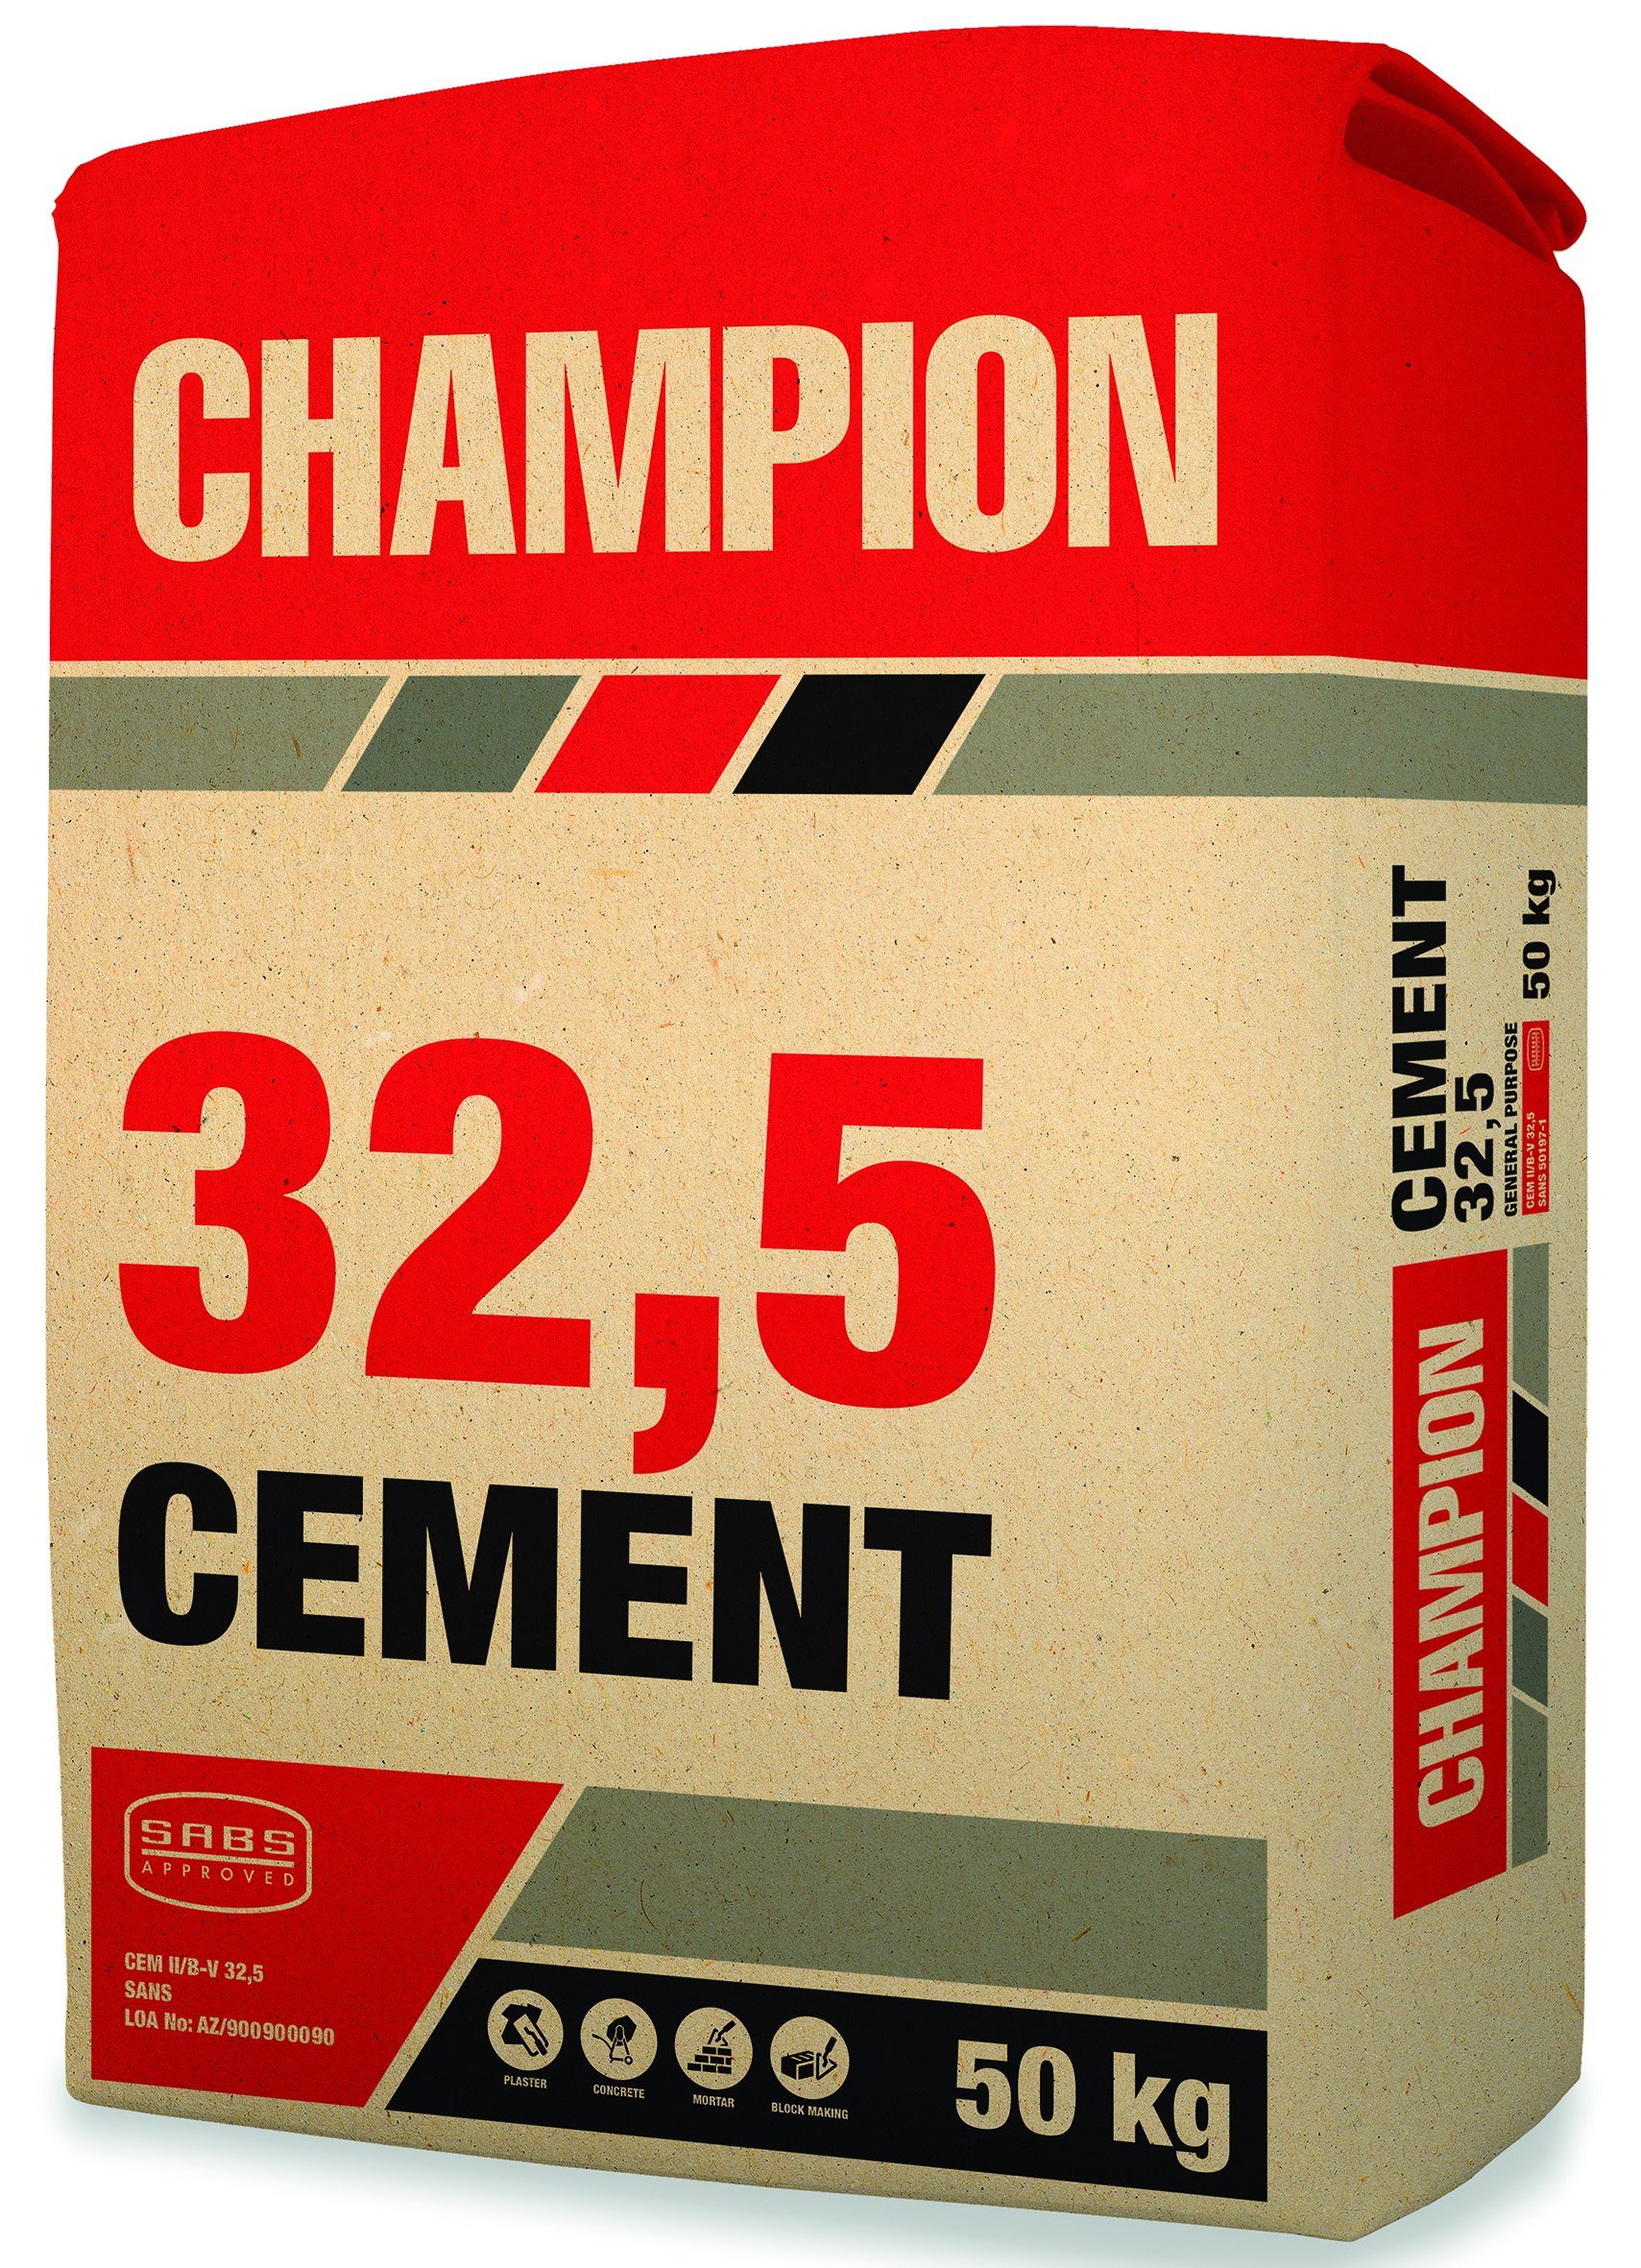 CHAMPION CEMENT 50KG (32.5R)